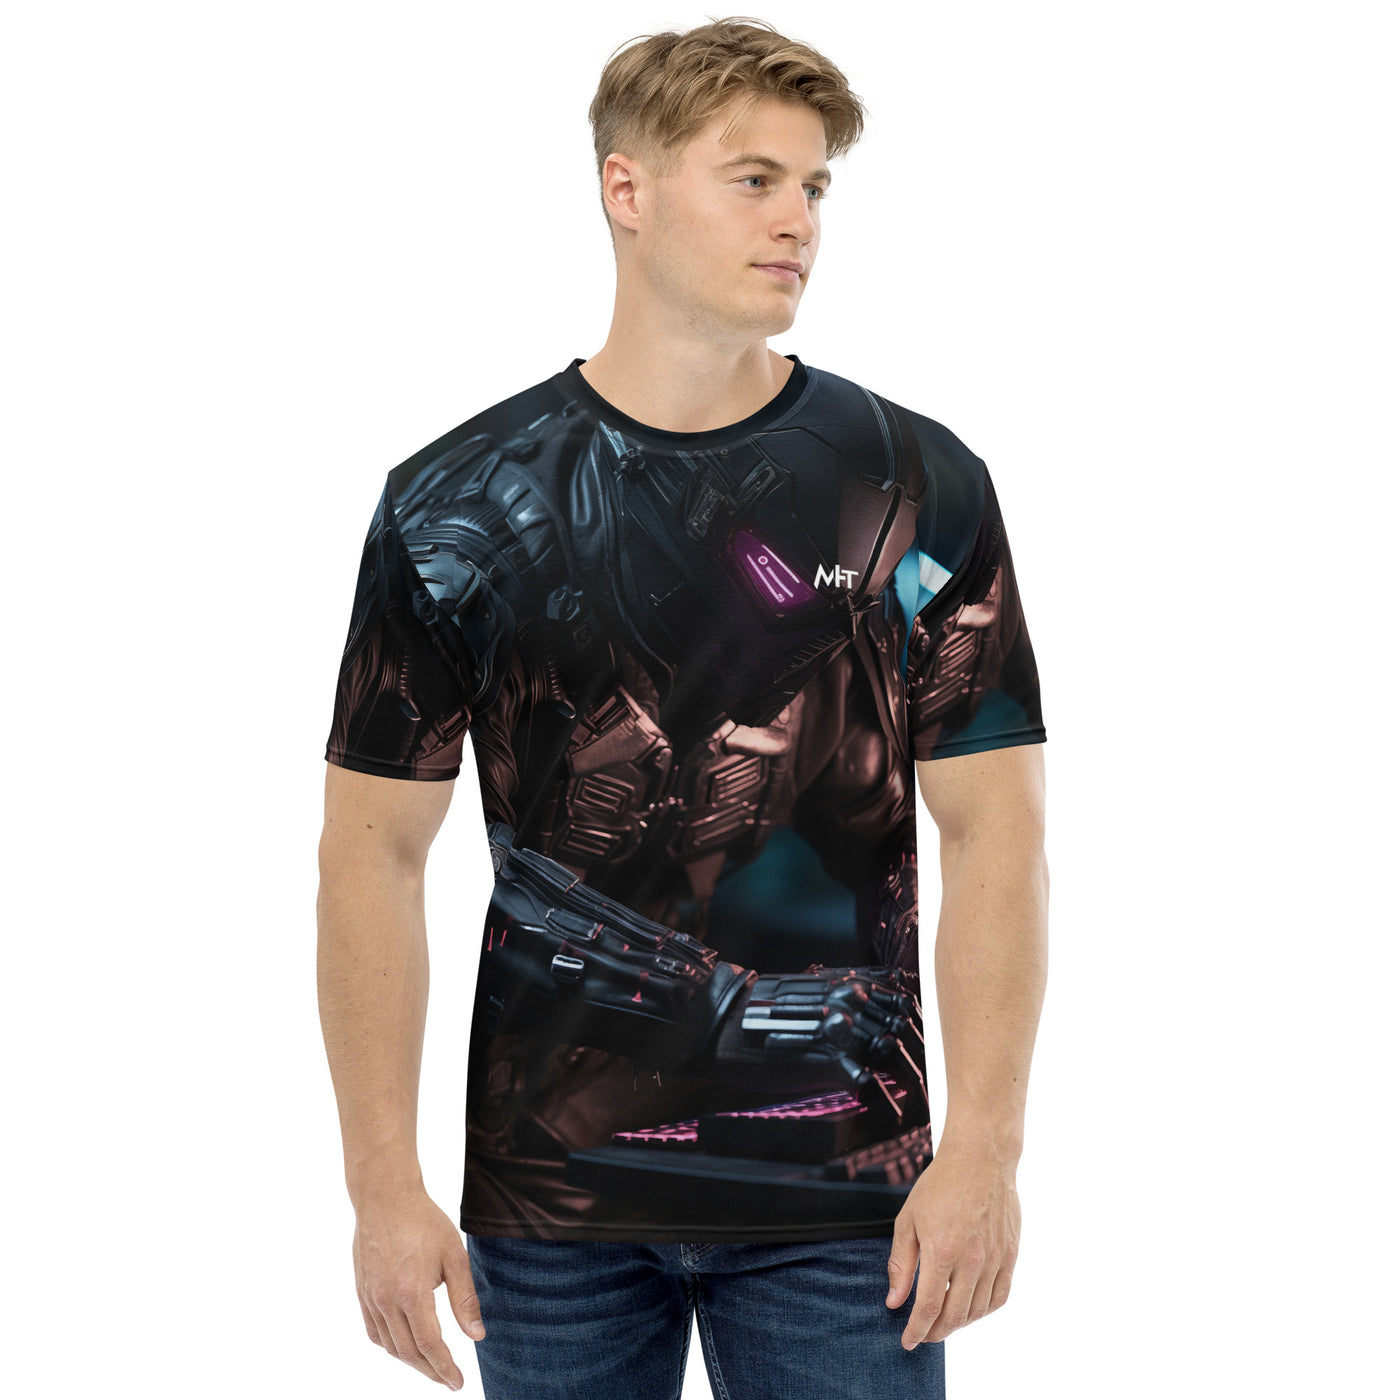 CyberArms Warrior v21 - Men's t-shirt